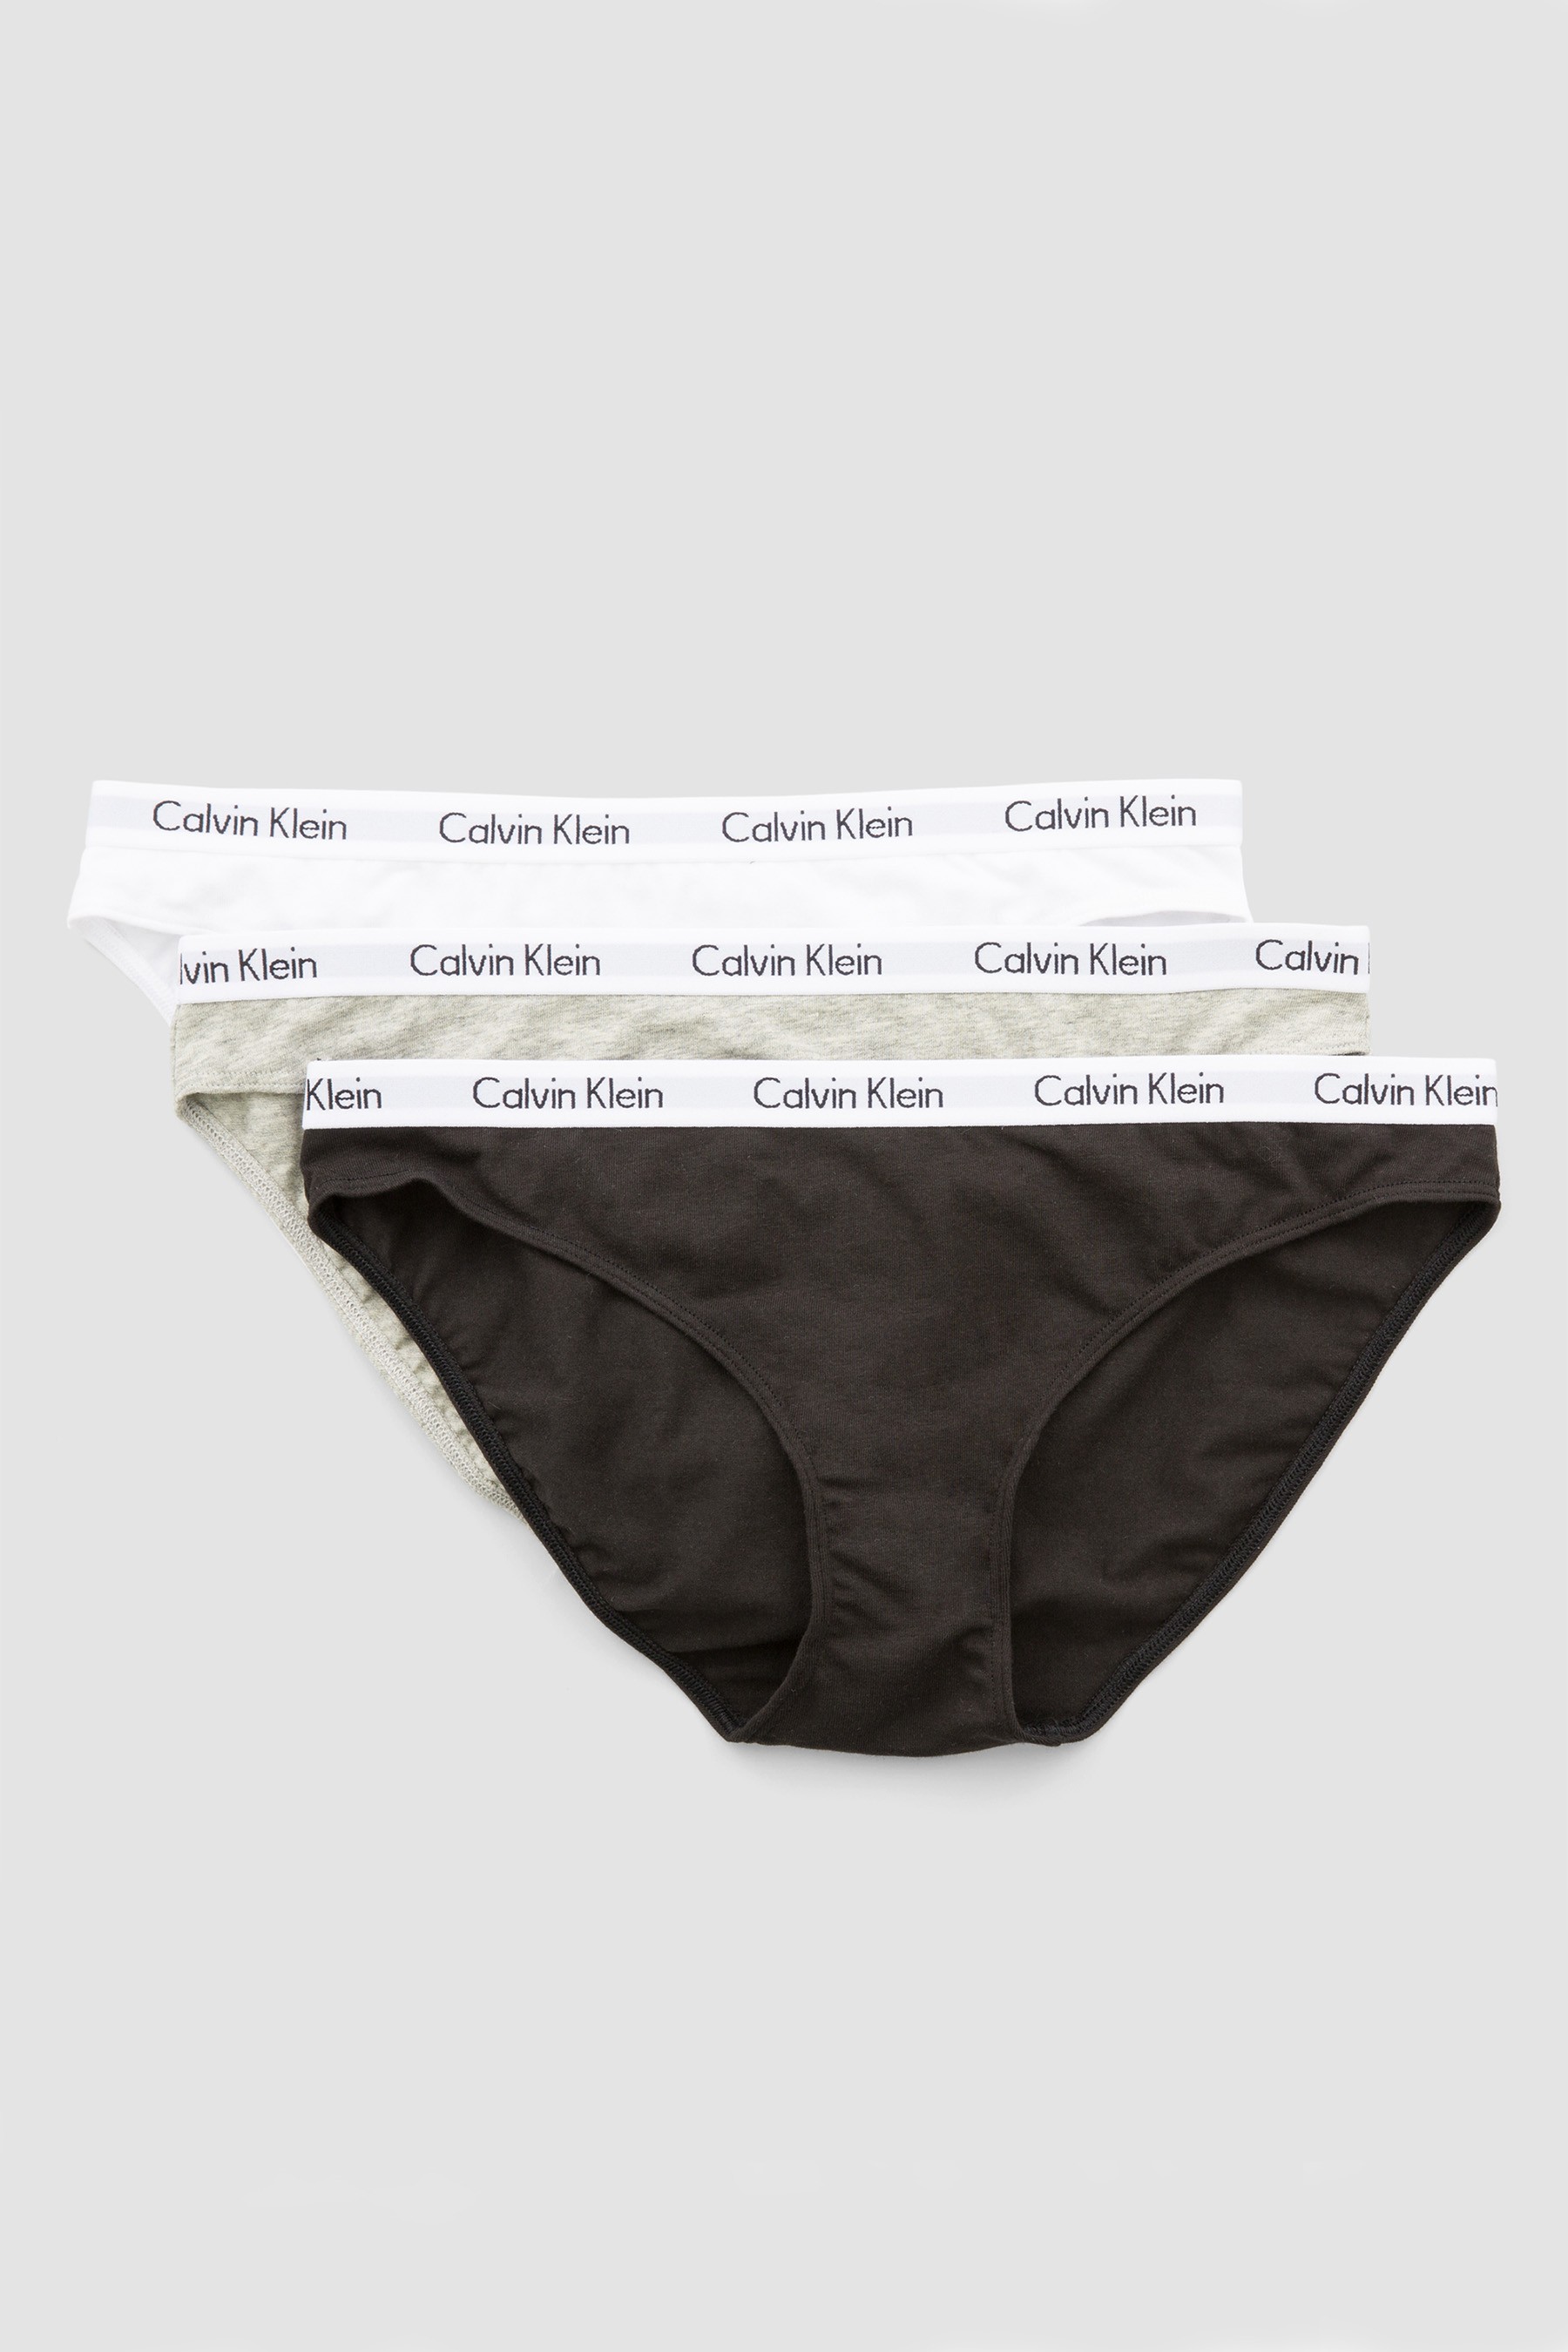 Calvin Klein Black Bikini Bottom Three Pack